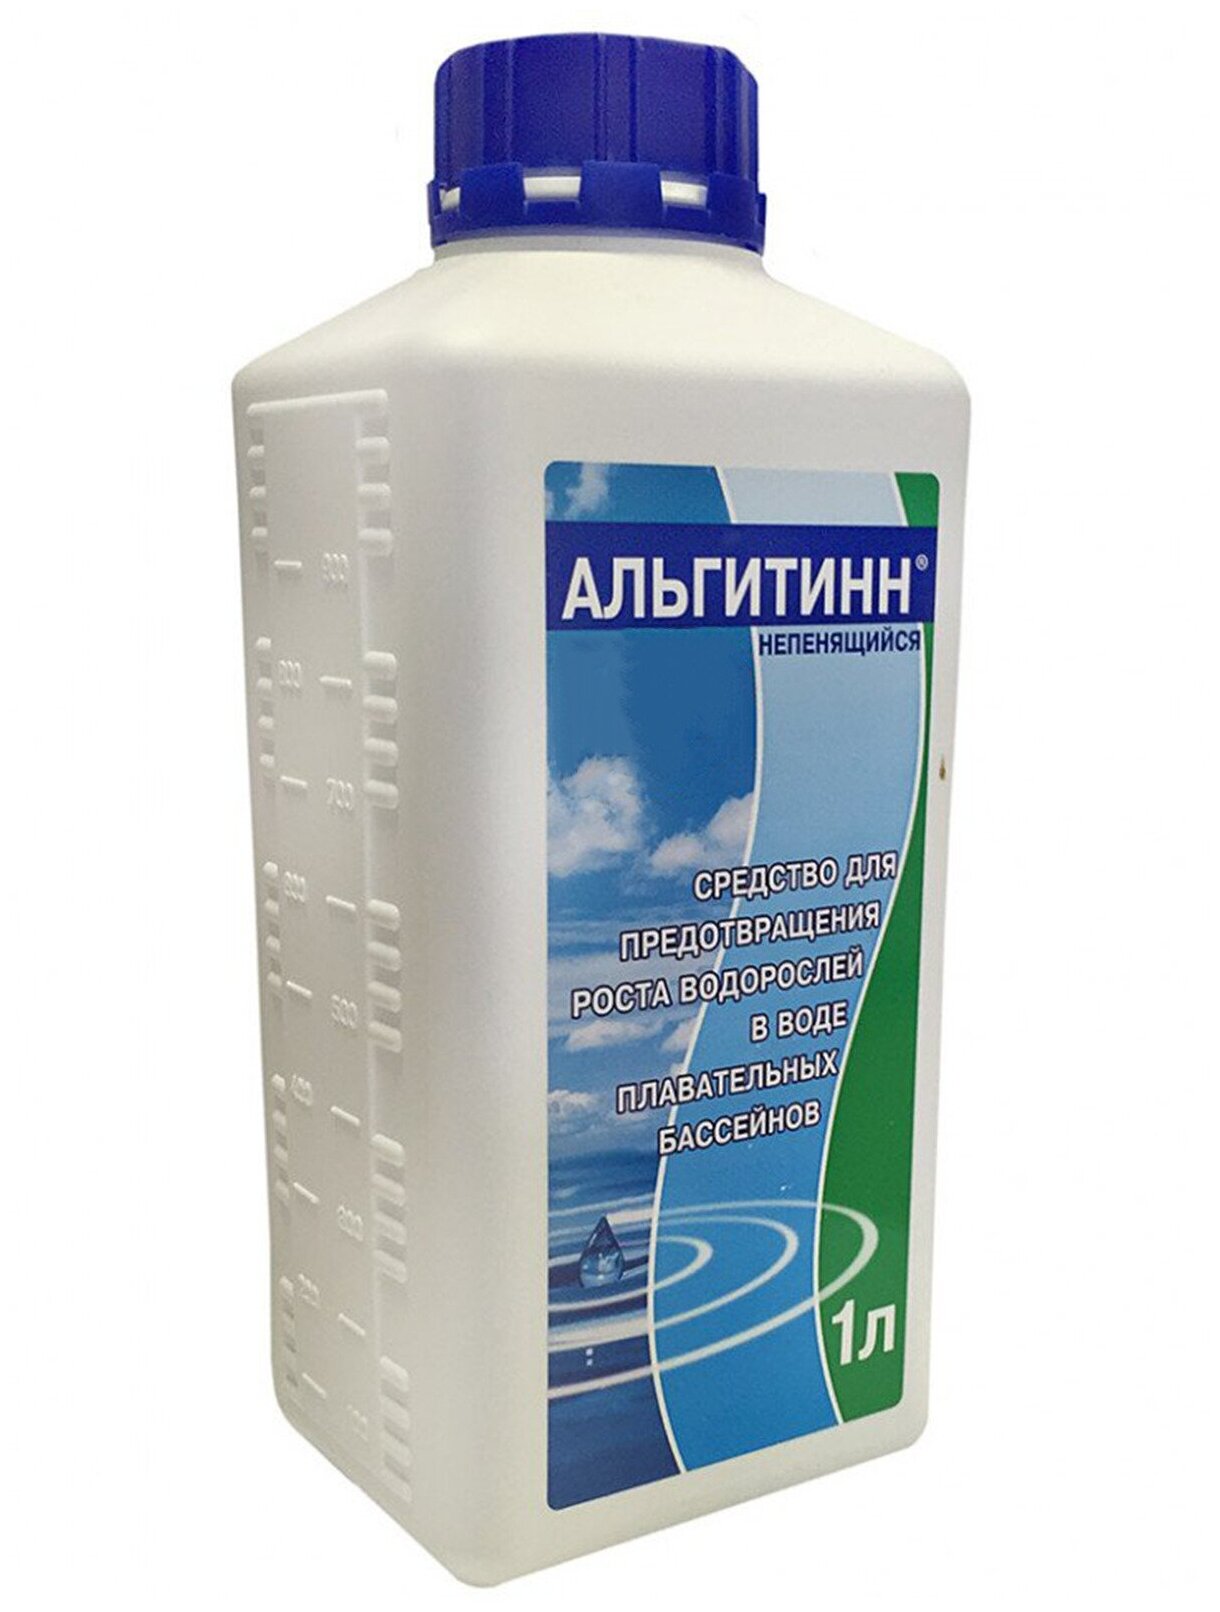 Альгитинн (1.0 л, жидкое средство) для борьбы с водорослями маркопул кемиклс - фотография № 1